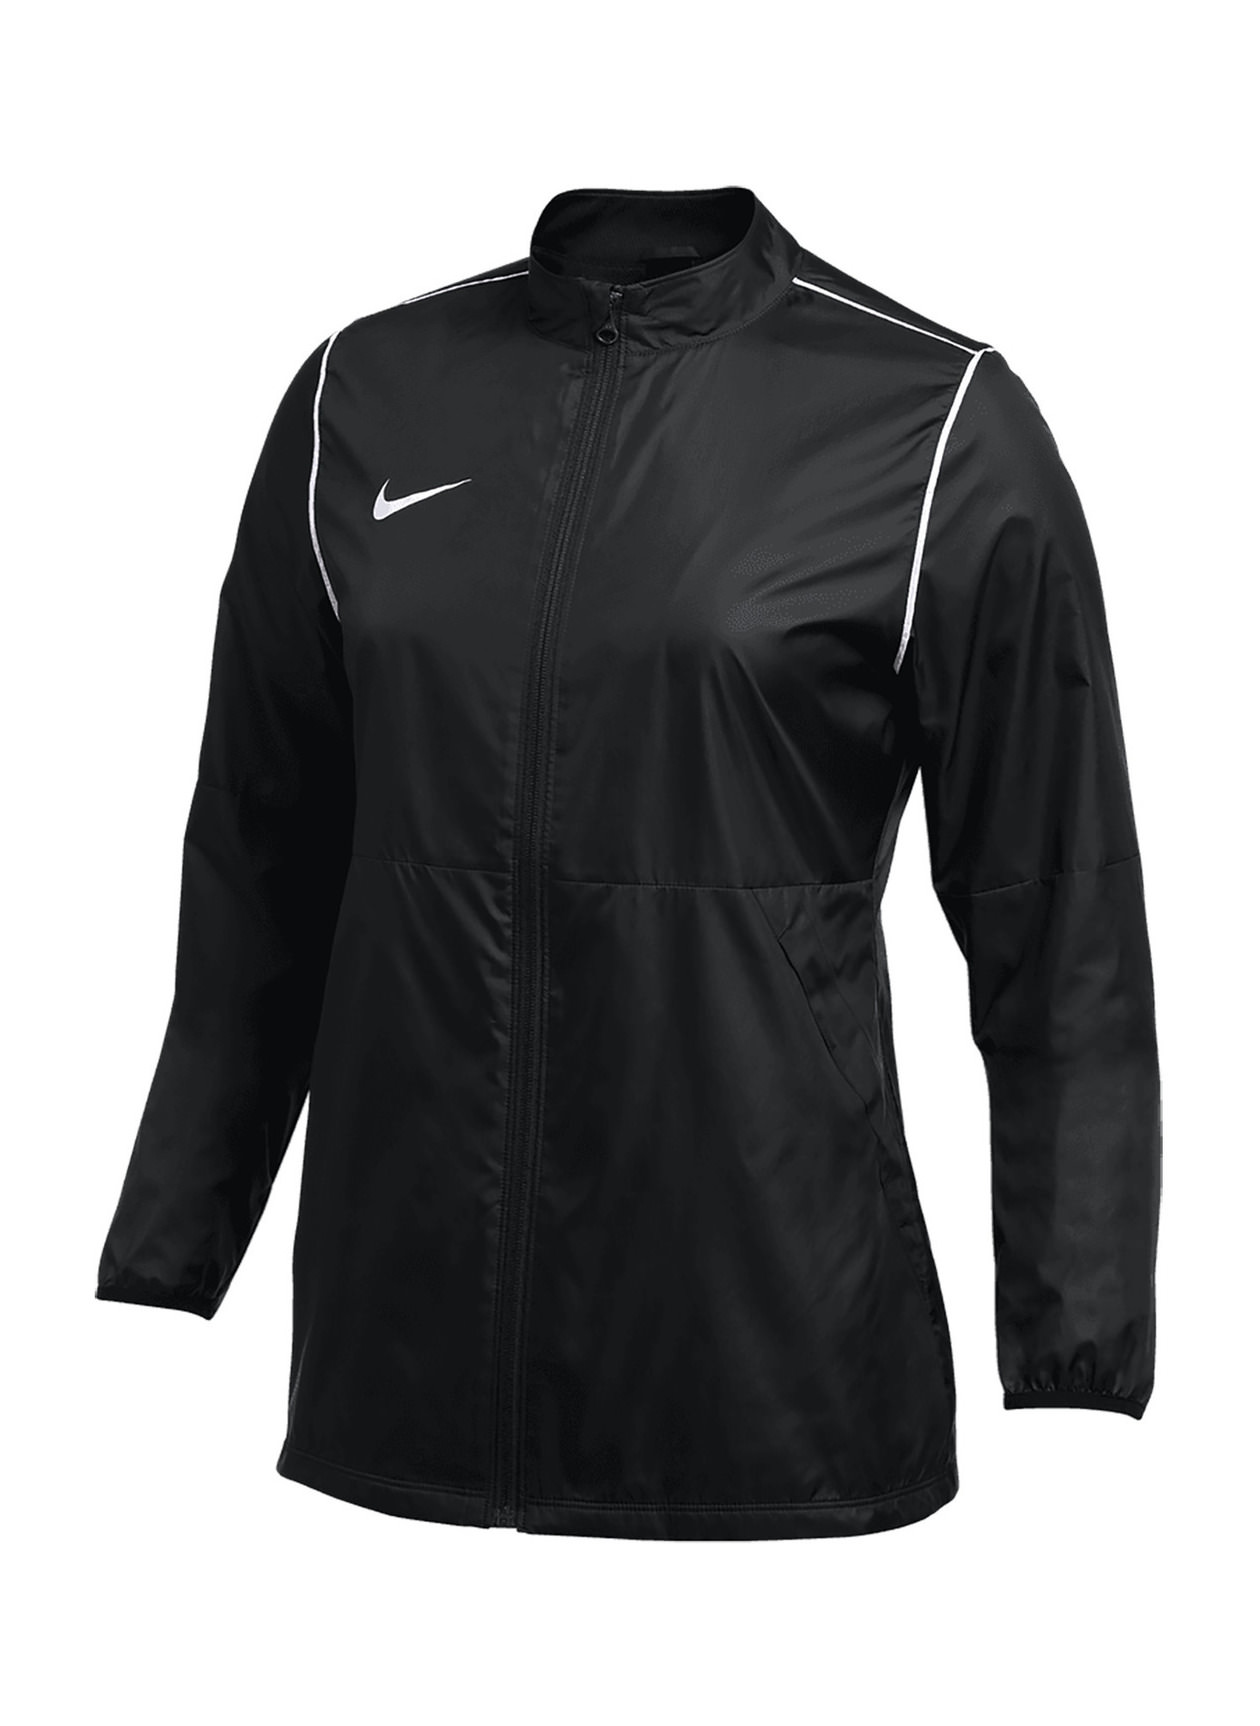 aritmética conversión tengo sueño Nike Women's Park20 Jacket | Nike Custom Embroidered Jackets